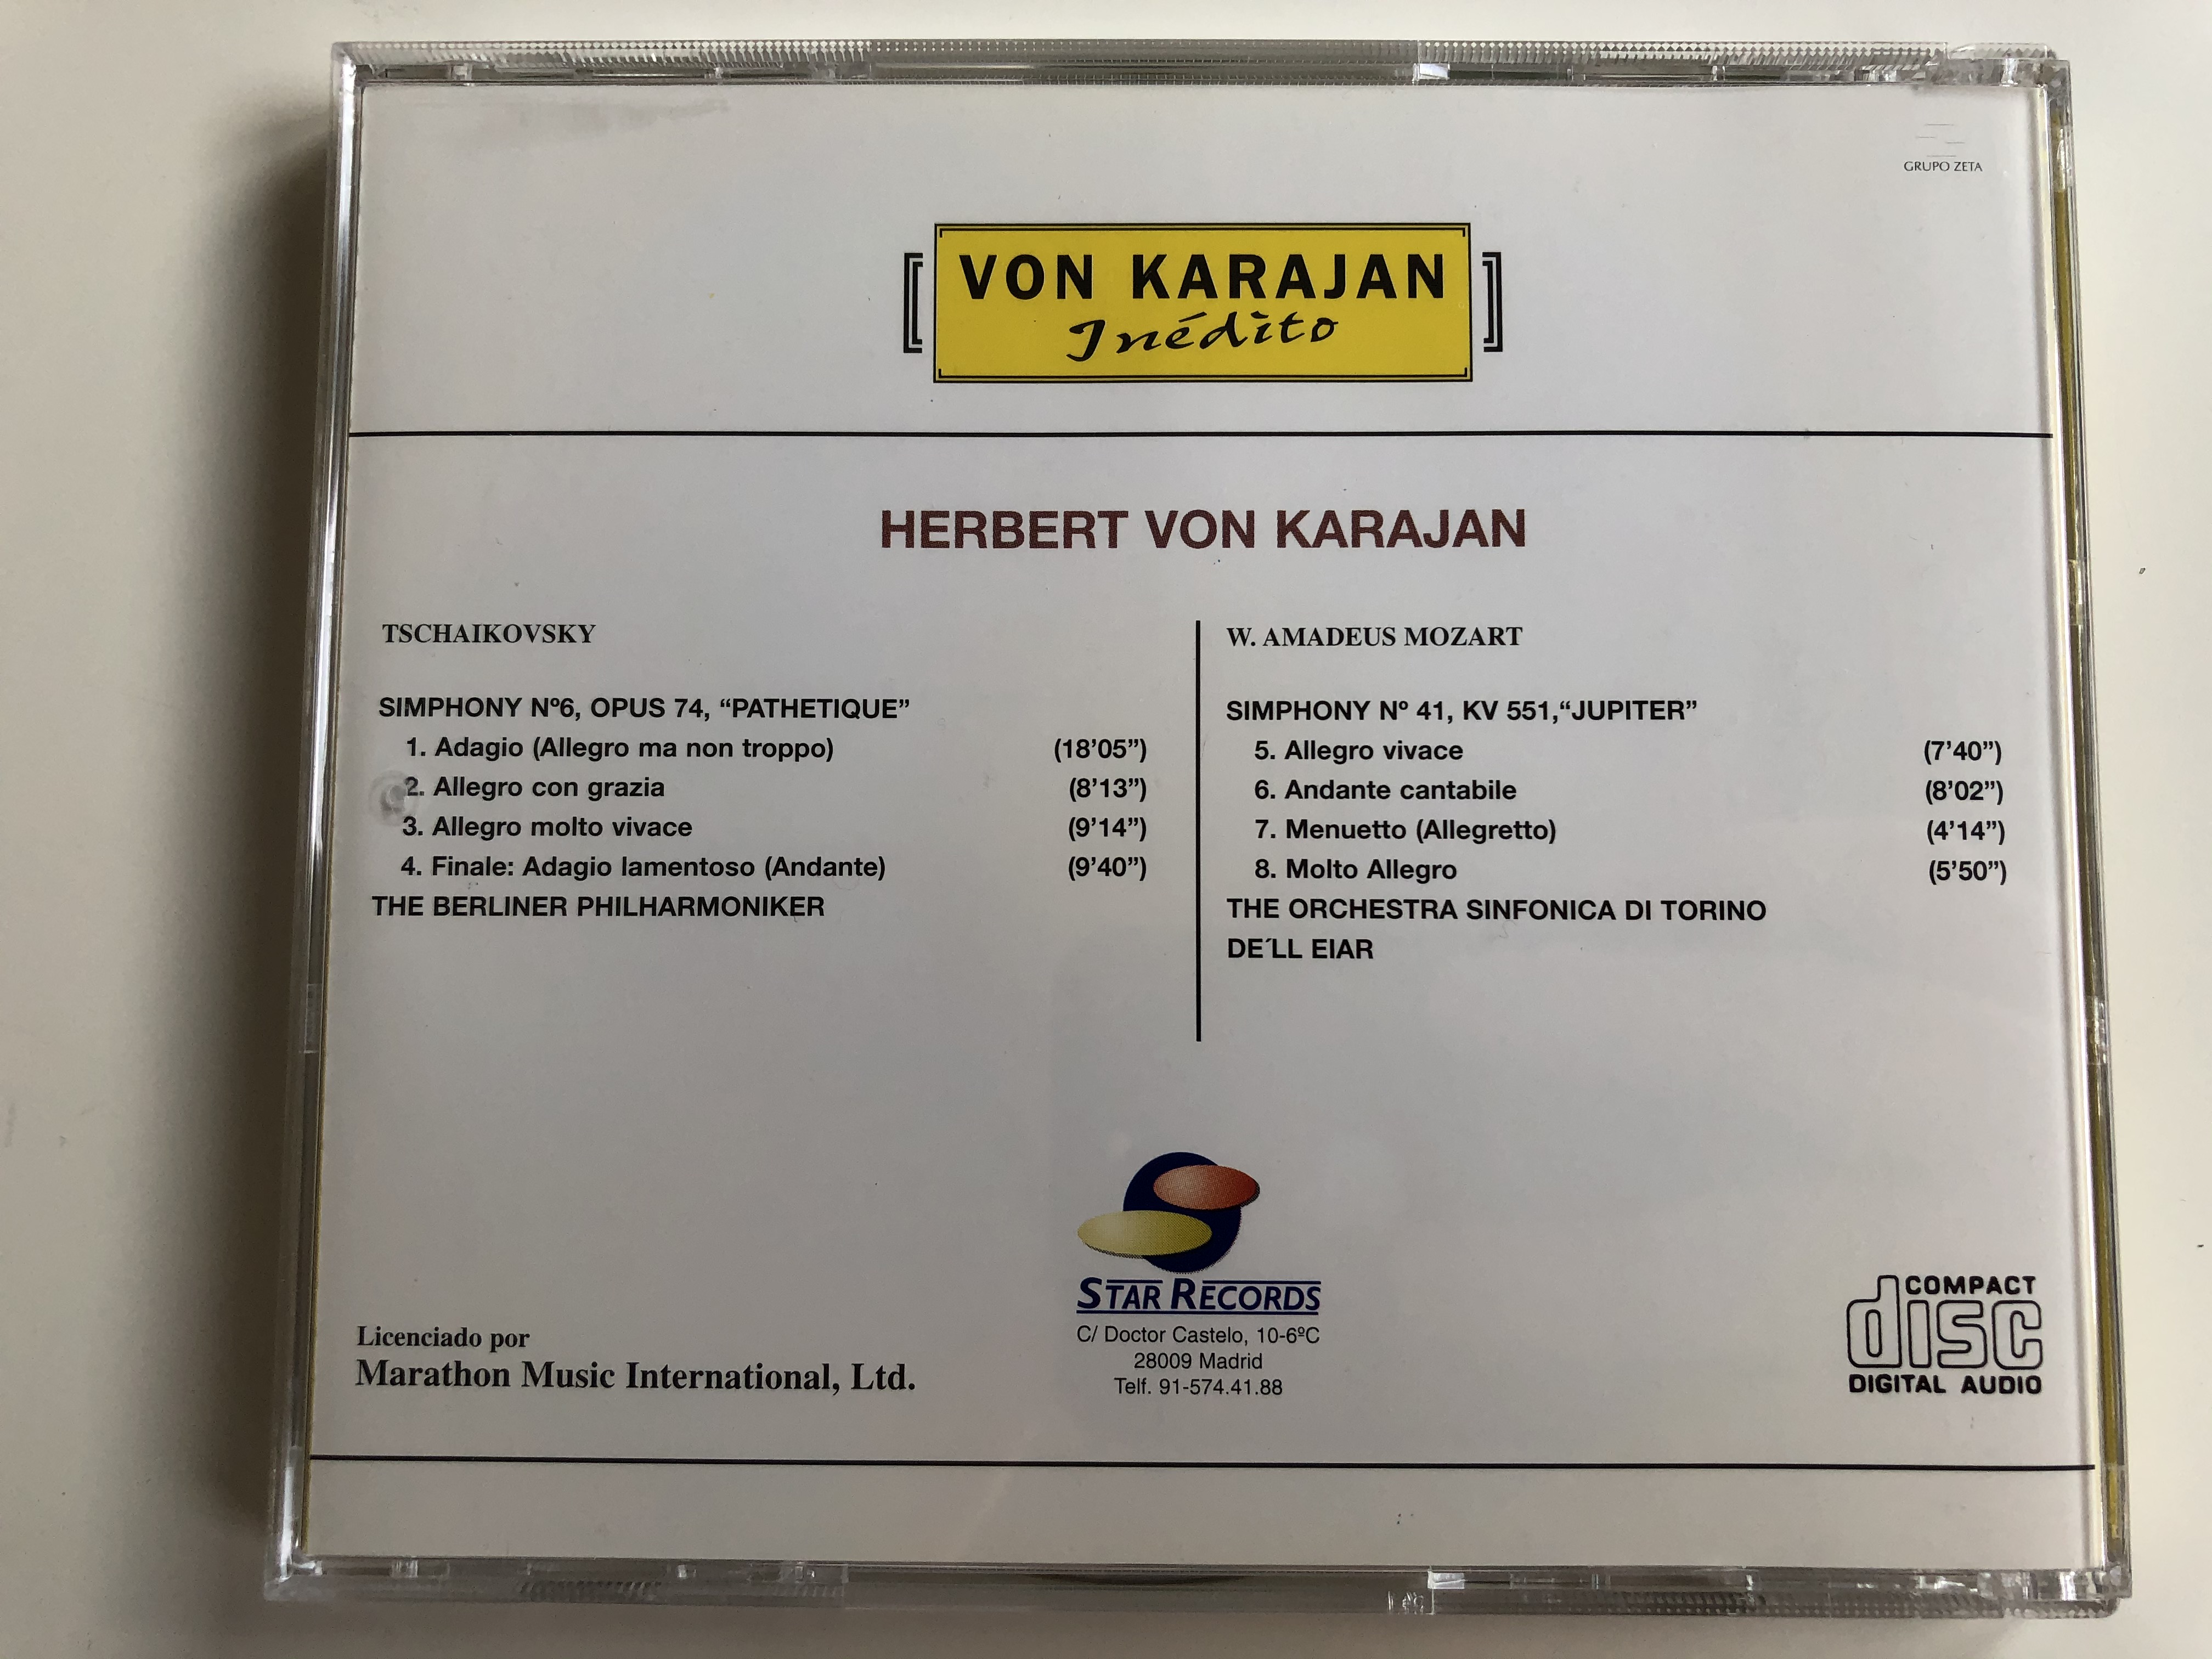 von-karajan-in-dito-3-mozart-tschaikovsky-star-records-audio-cd-1998-cd-c0005-4-.jpg